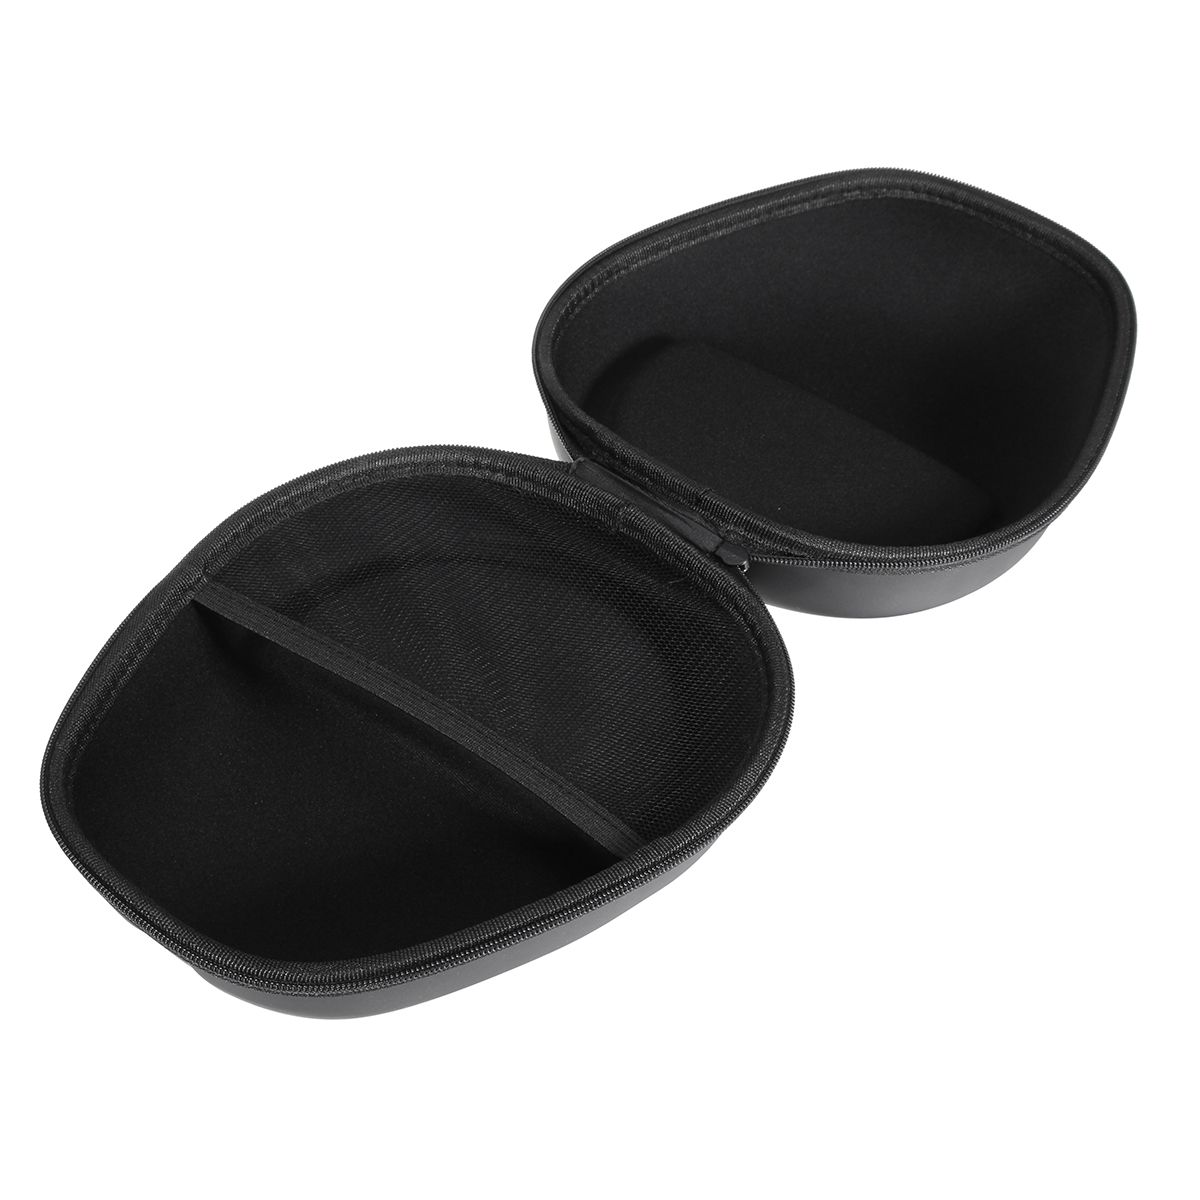 Portable-EVA-Carrying-Hard-Case-Bag-Storage-Box-for-Earphone-Headphone-Headset-1534038